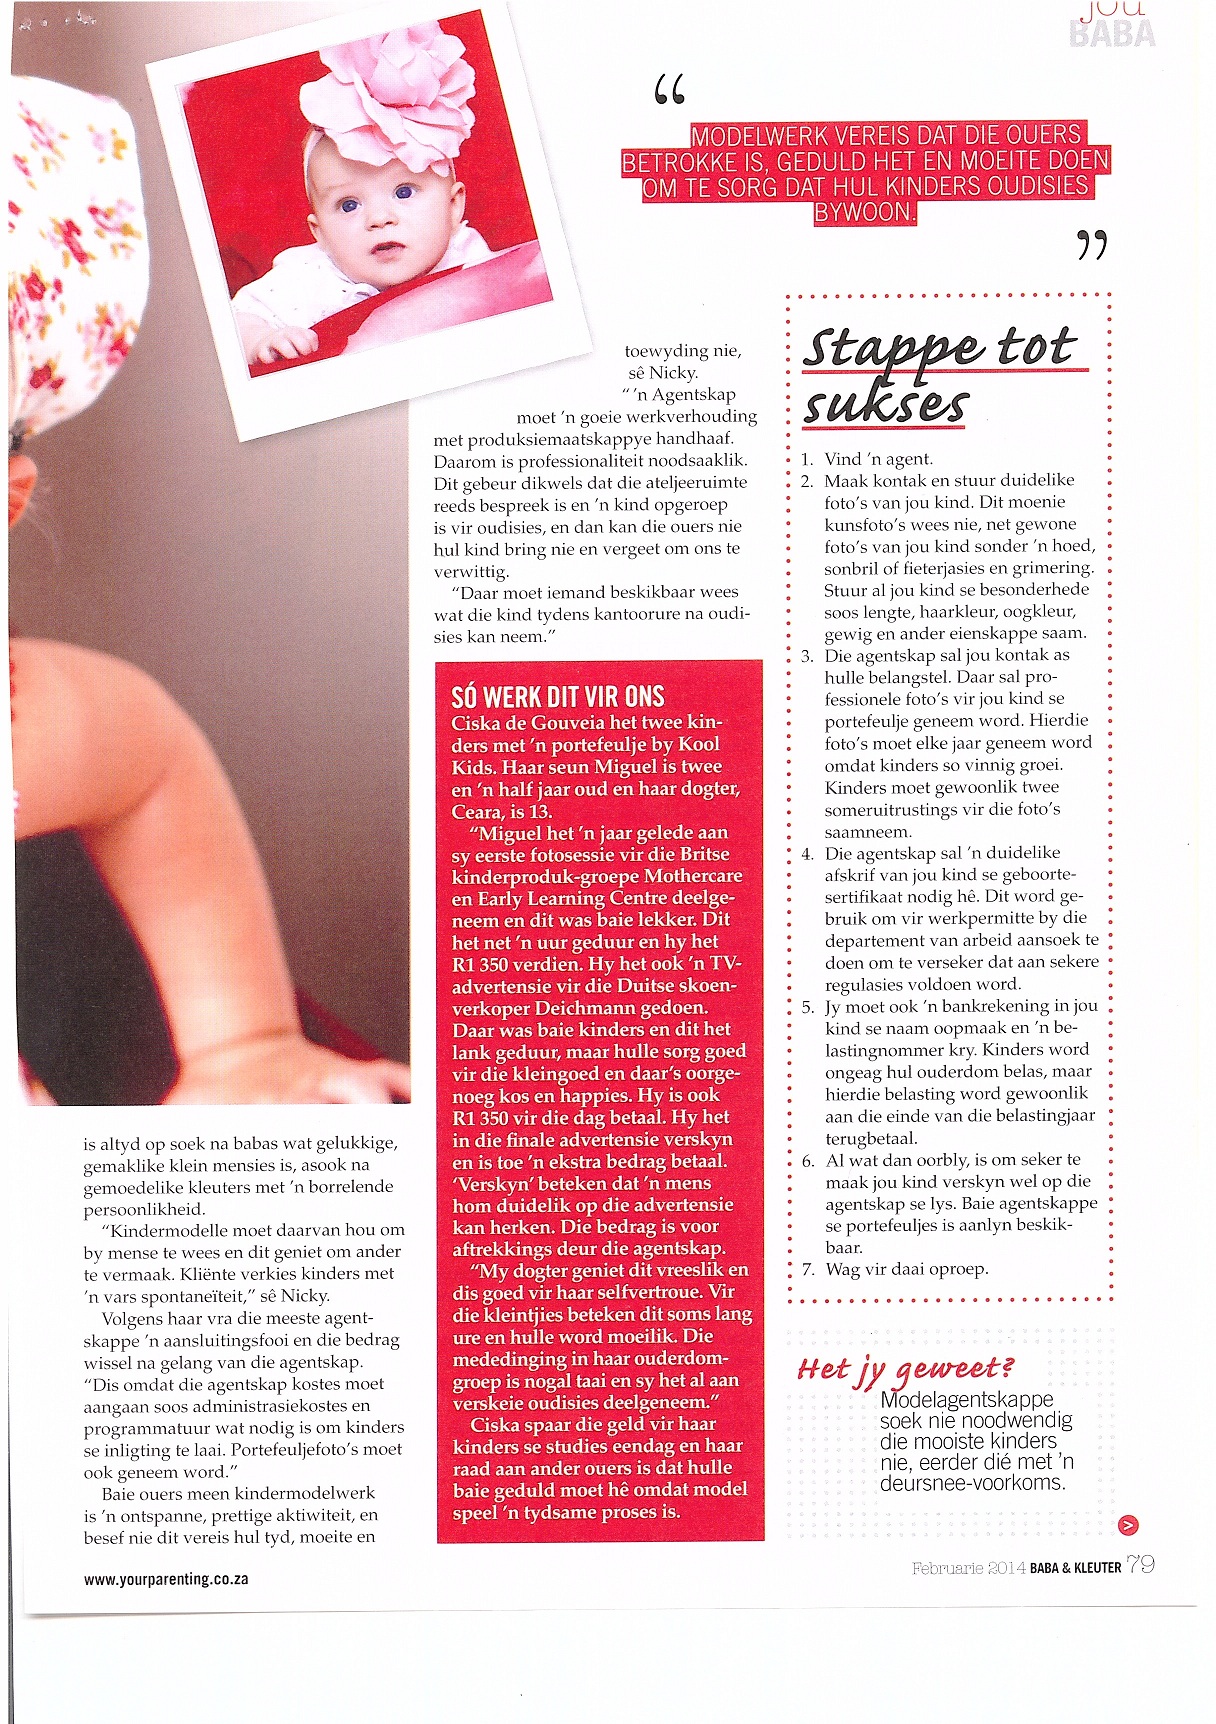 Baba en Kleuter Magazine Feb 2014 Article on Casting Industry Featuring Kool Kids P3